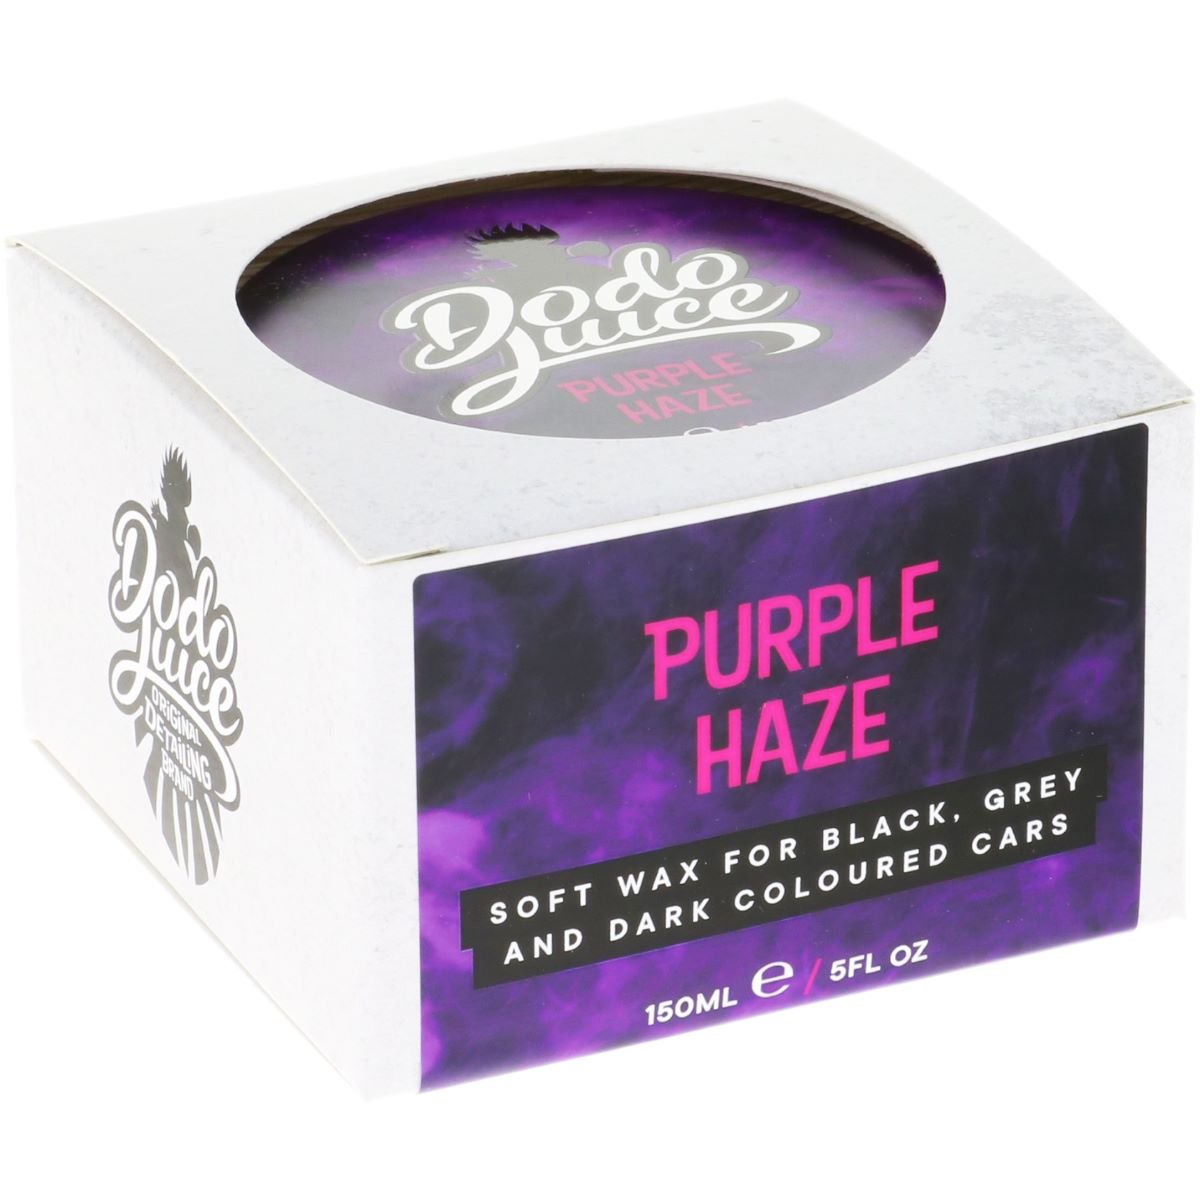 Purple Haze soft wax for dark coloured cars  - 150ml